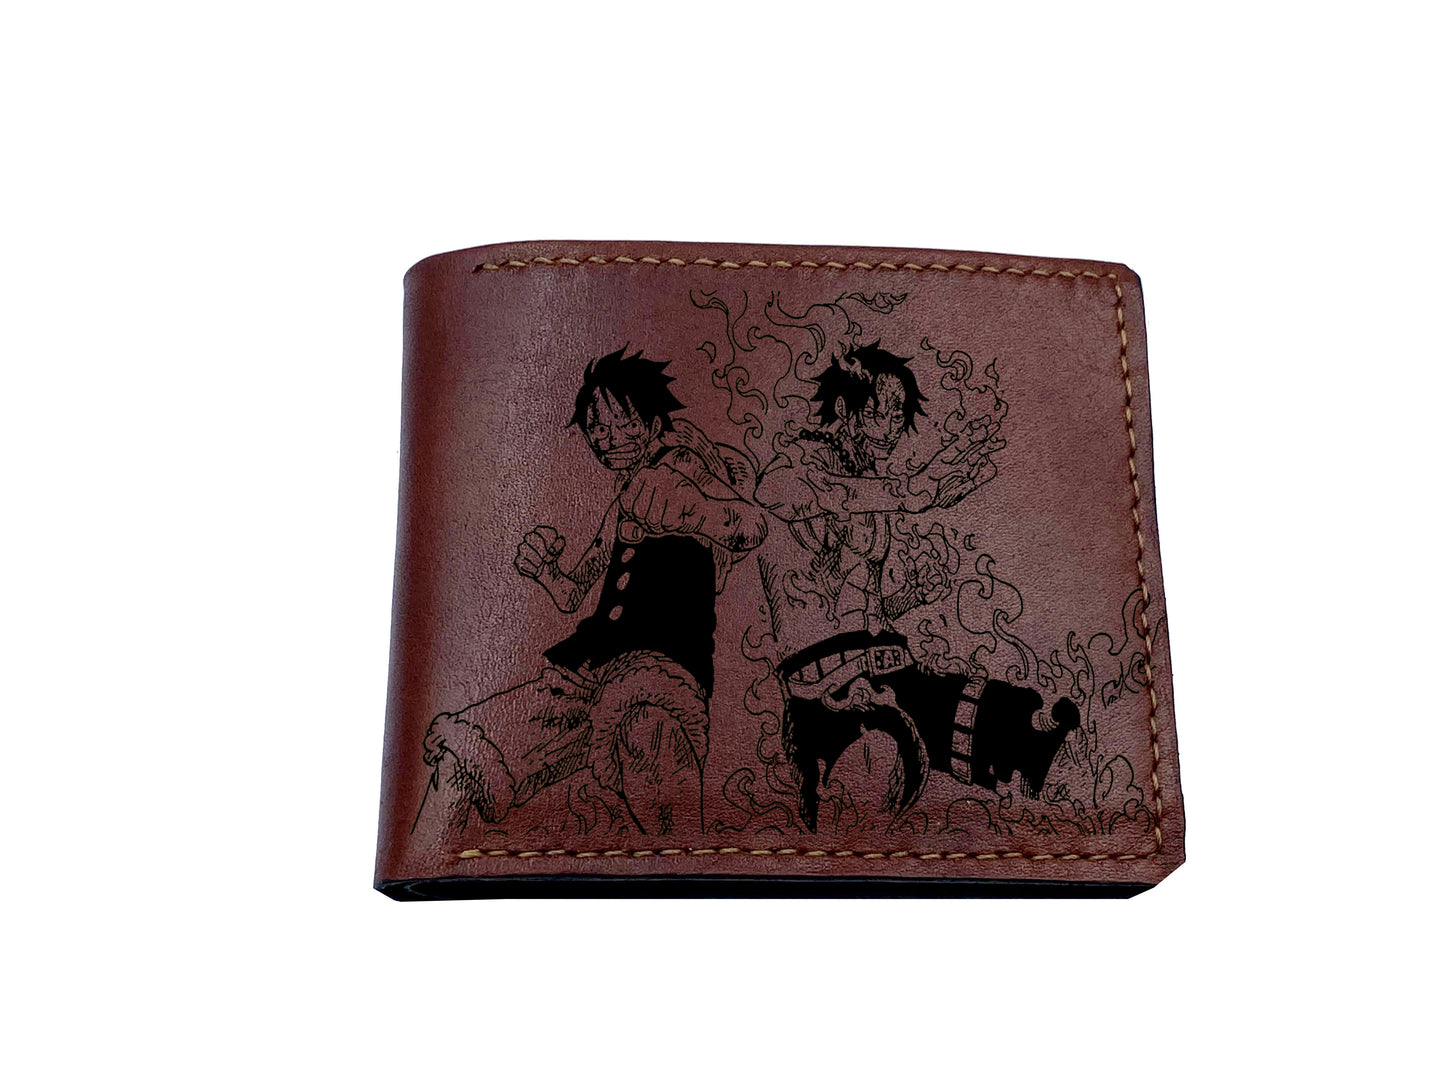 Mayan Corner - Japan anime leather art wallet, morden art drawing men gift, Custom One piece wallet for him, One piece art present